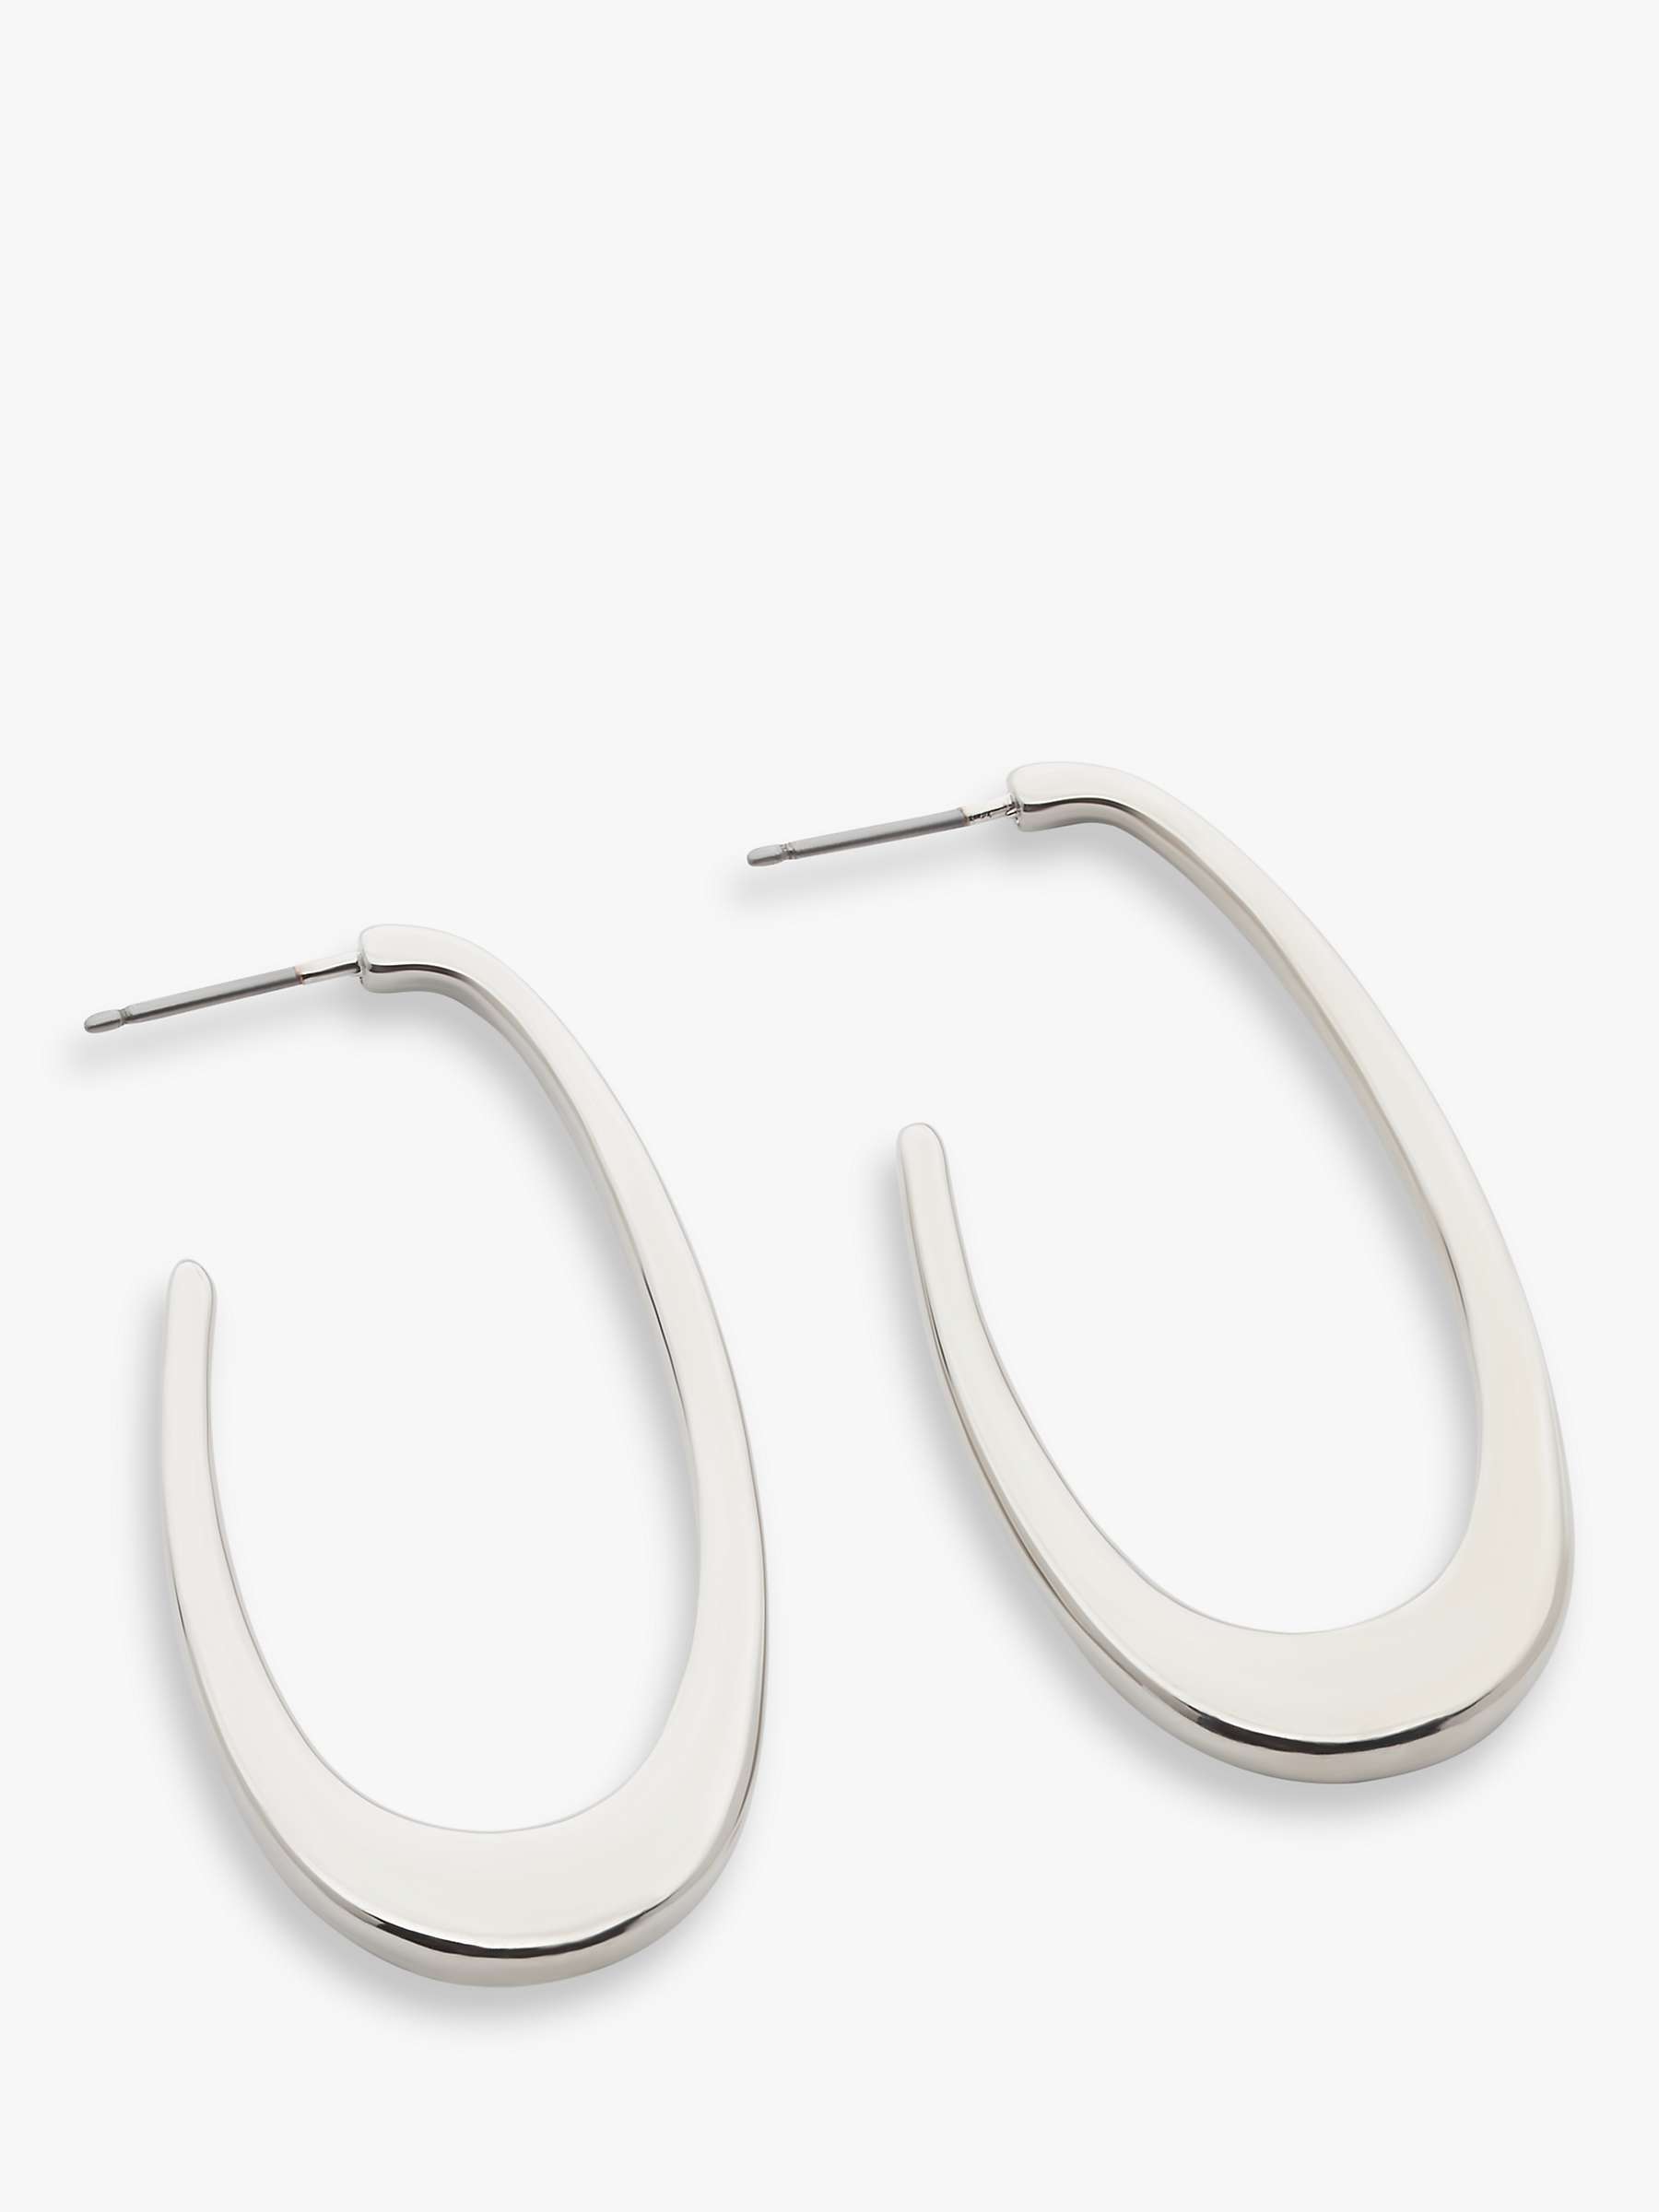 Buy John Lewis Highly Polished Statement Oval Hoop Earrings Online at johnlewis.com